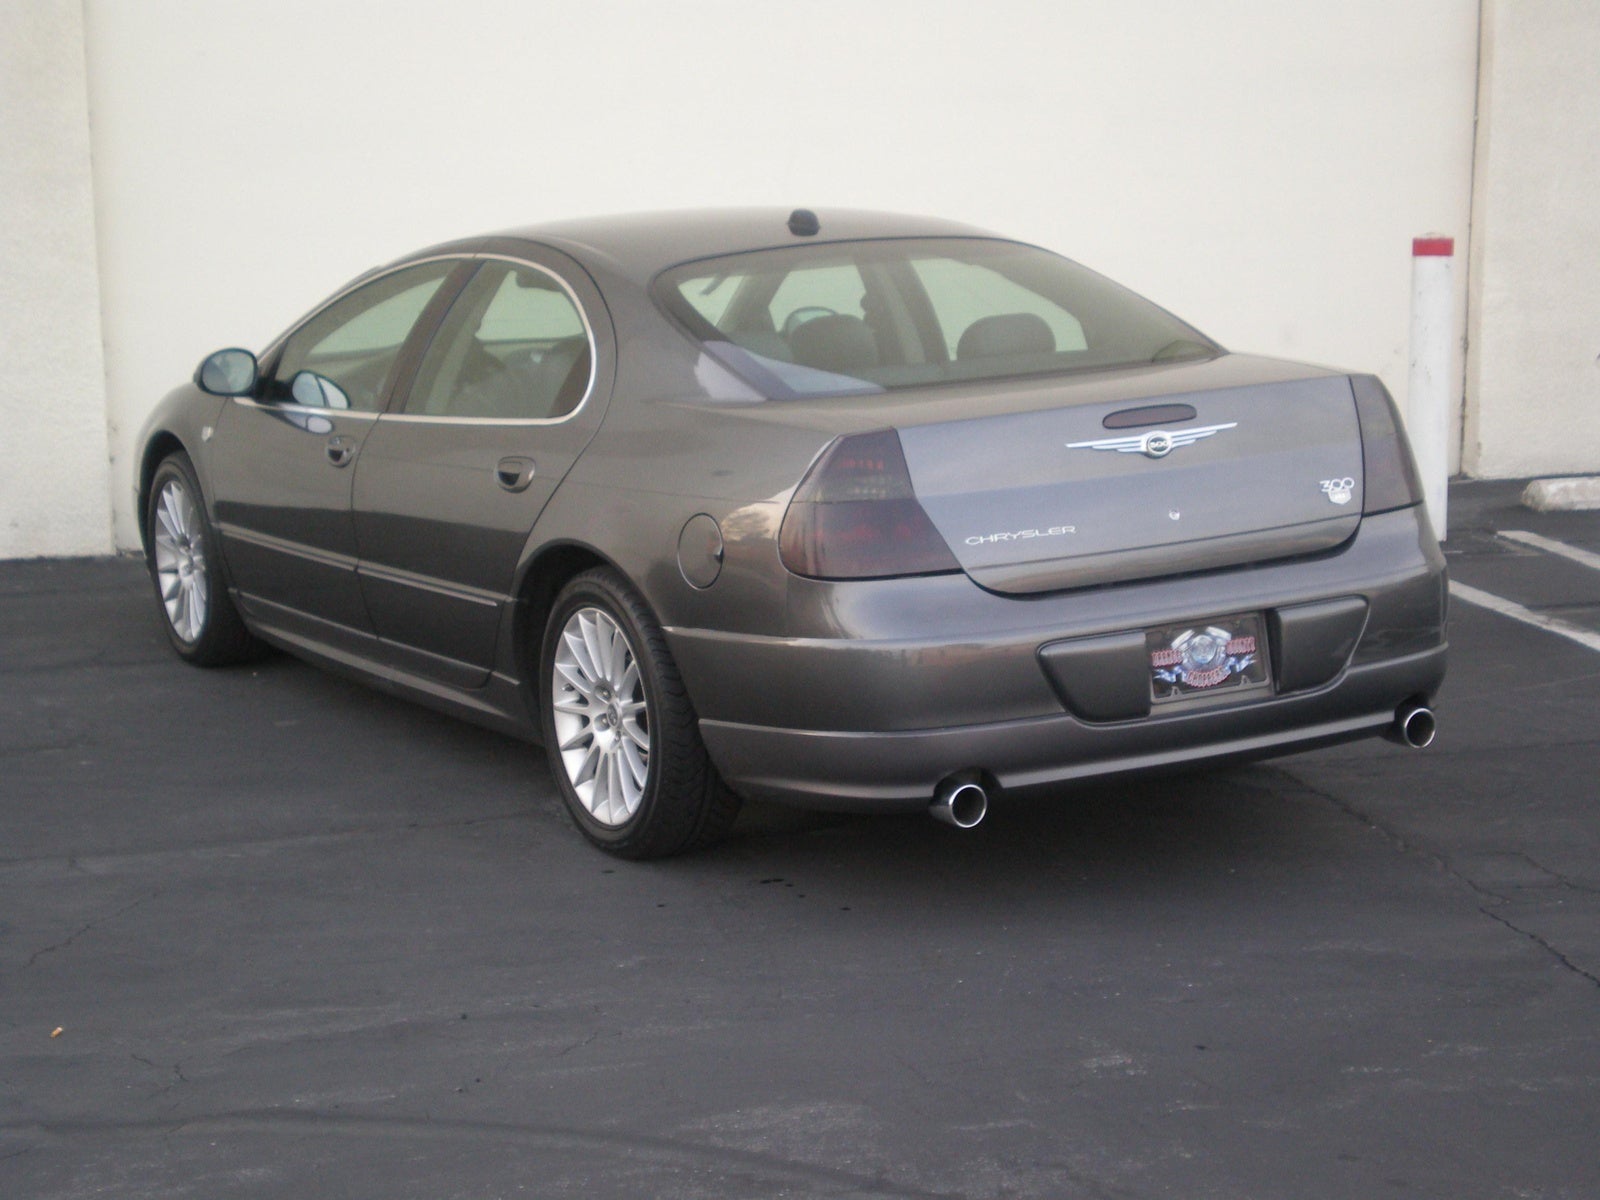 02 Chrysler 300m review #5